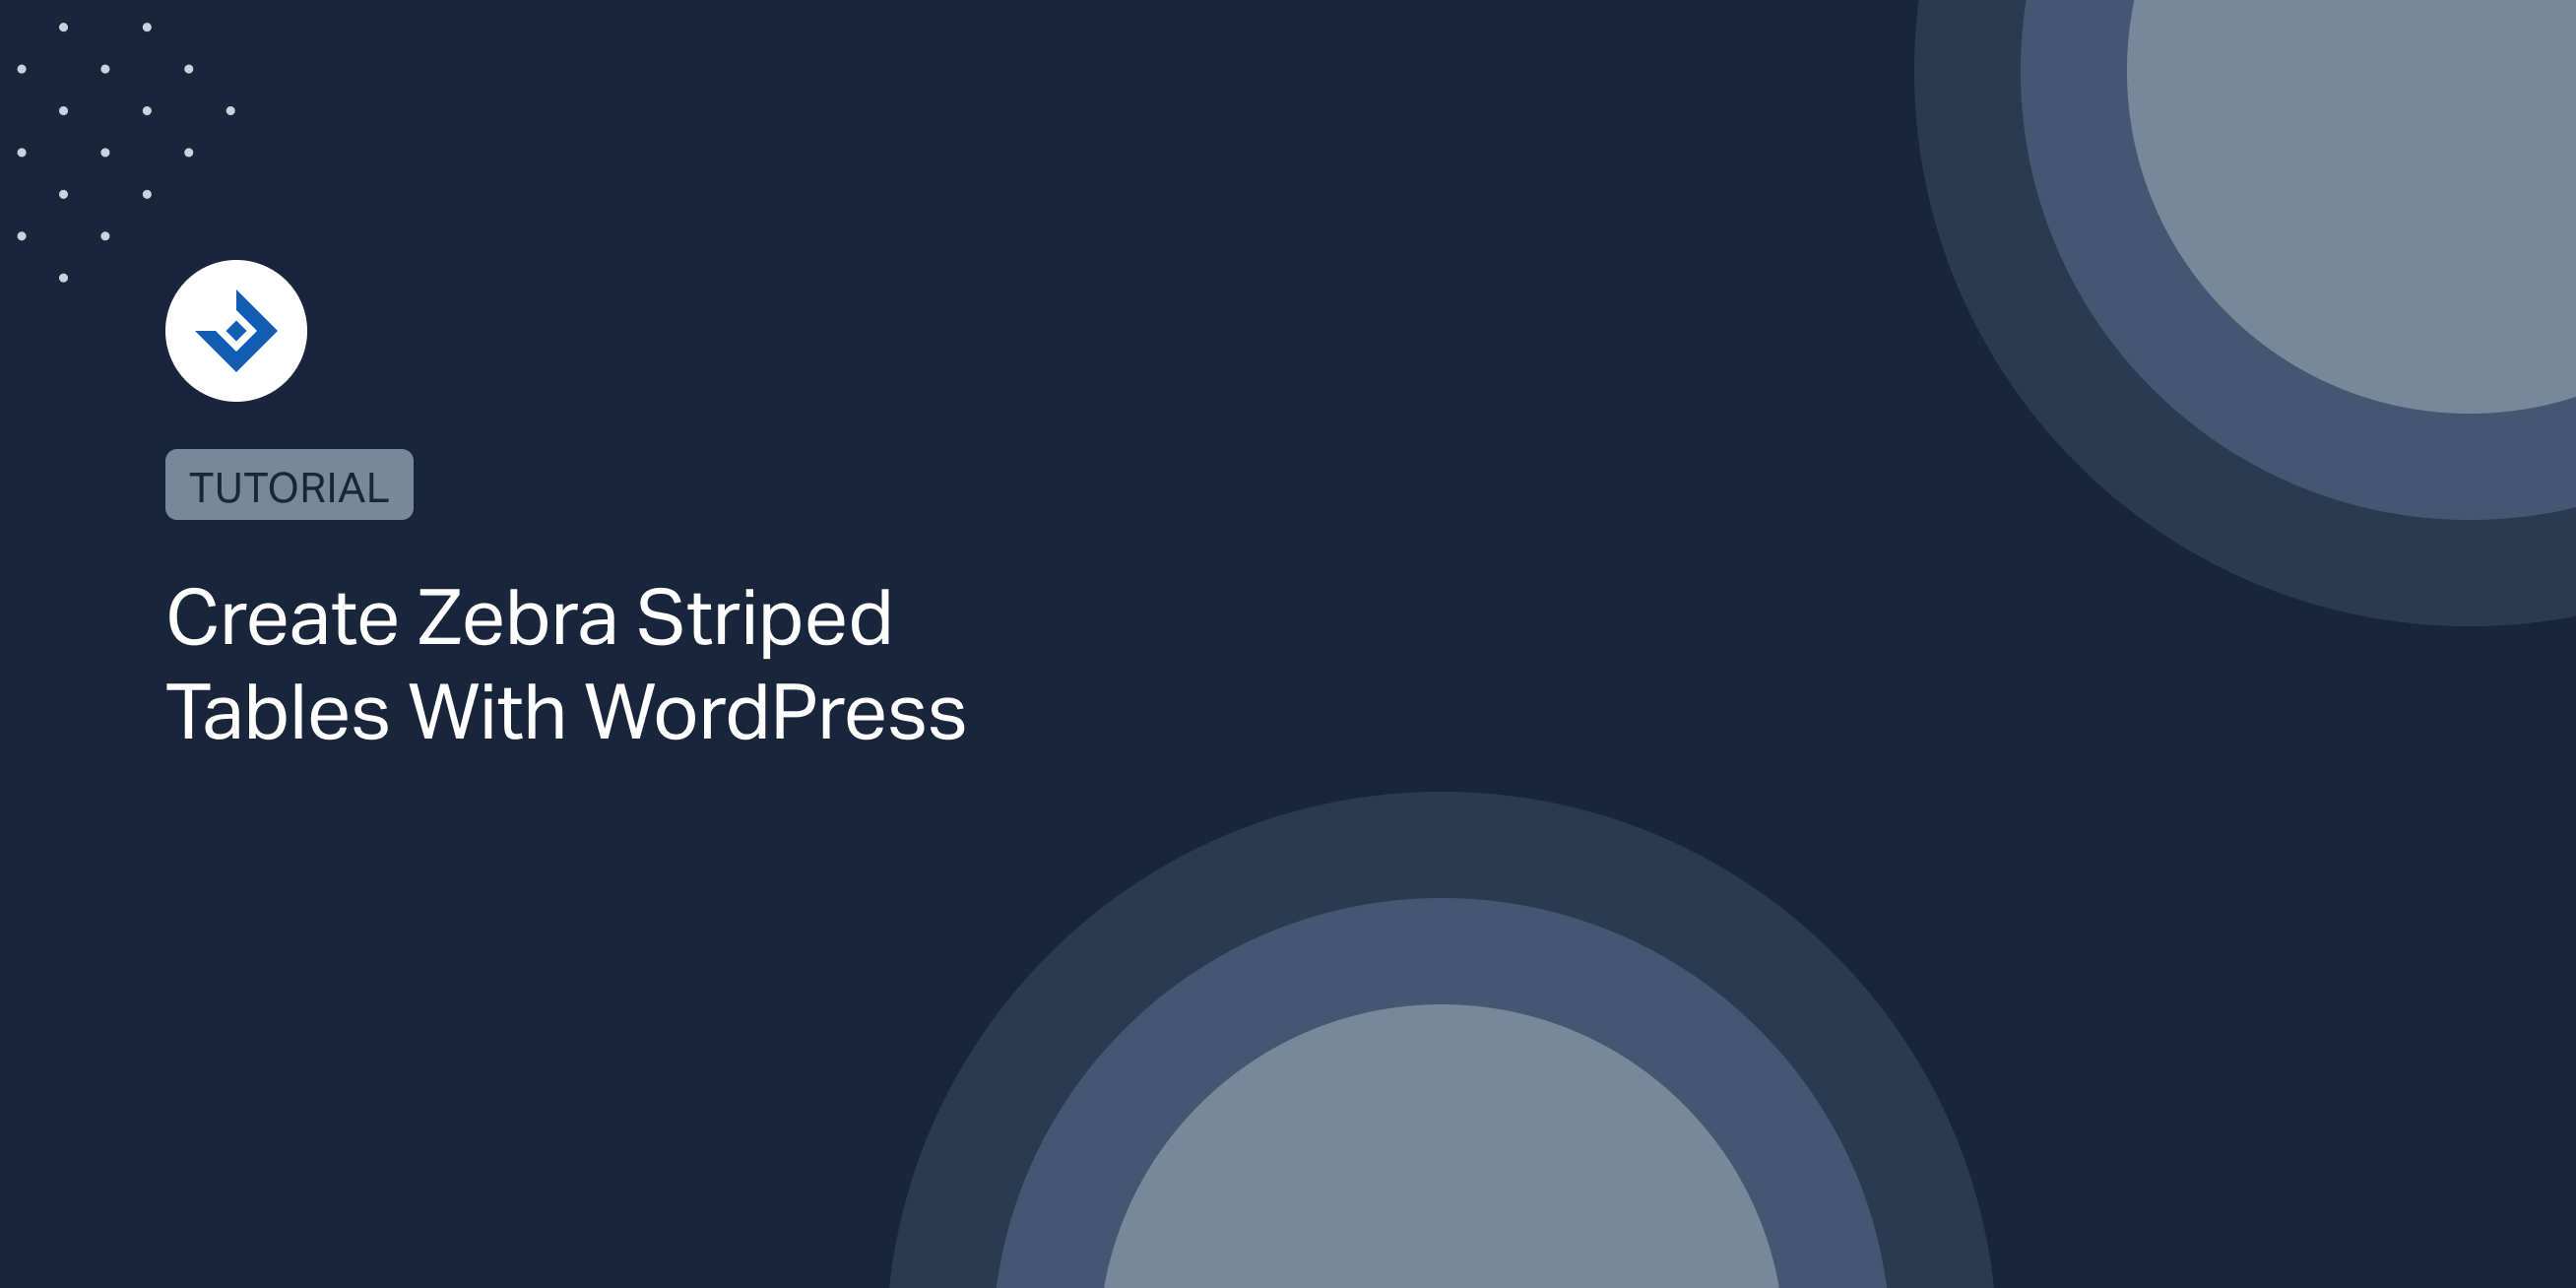 Create Zebra Striped Tables With WordPress